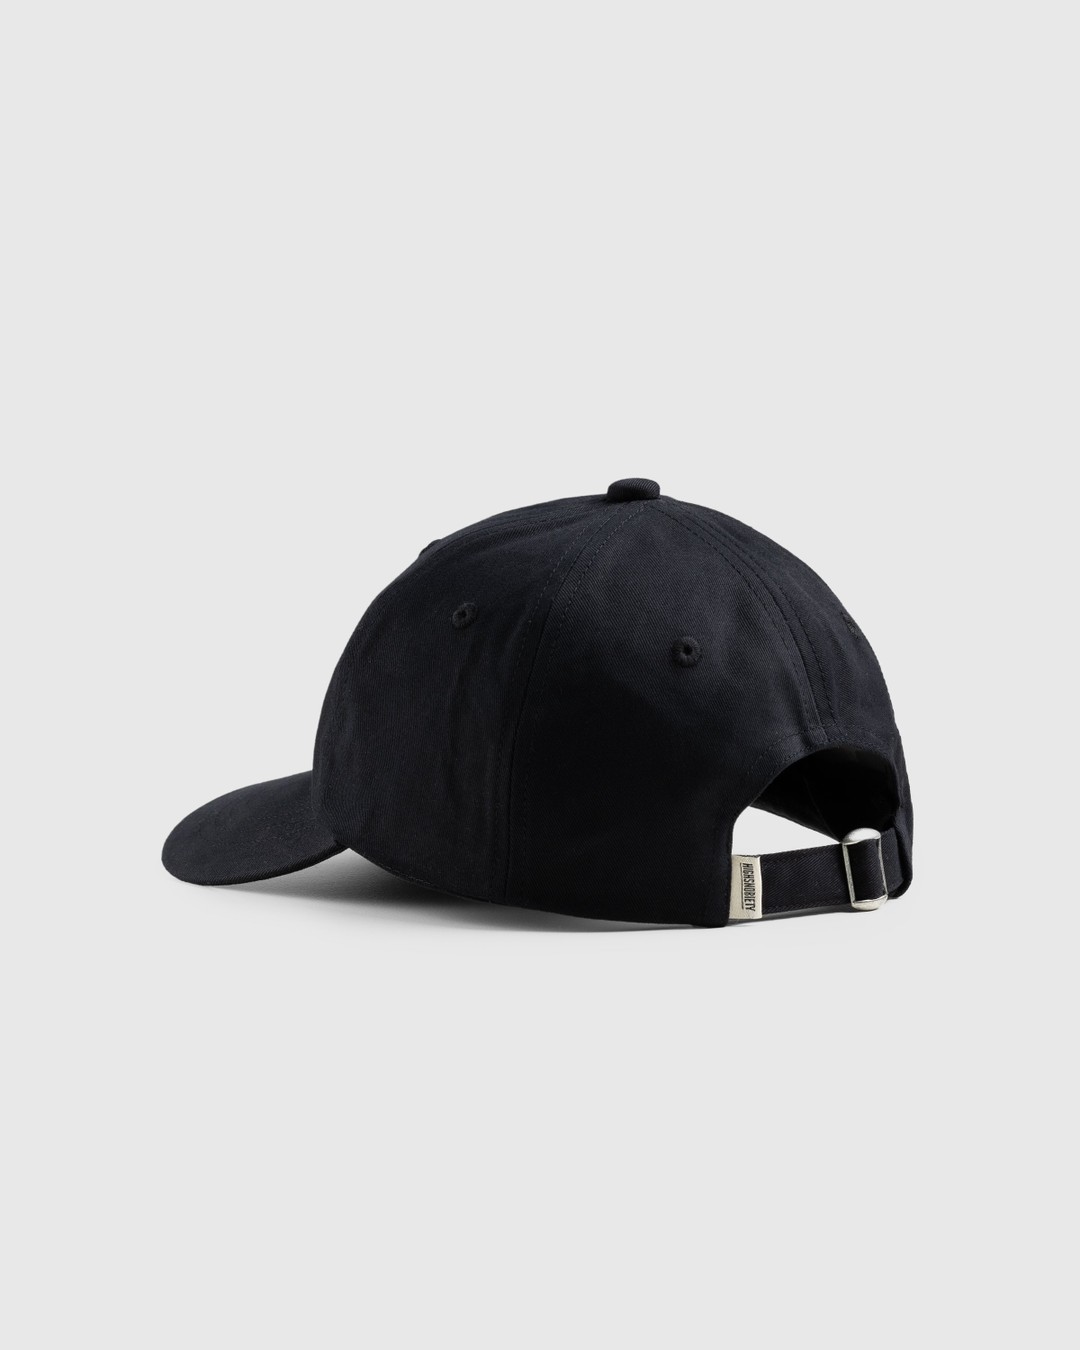 Bar Basso x Highsnobiety – Logo Cap Black - Hats - Black - Image 3